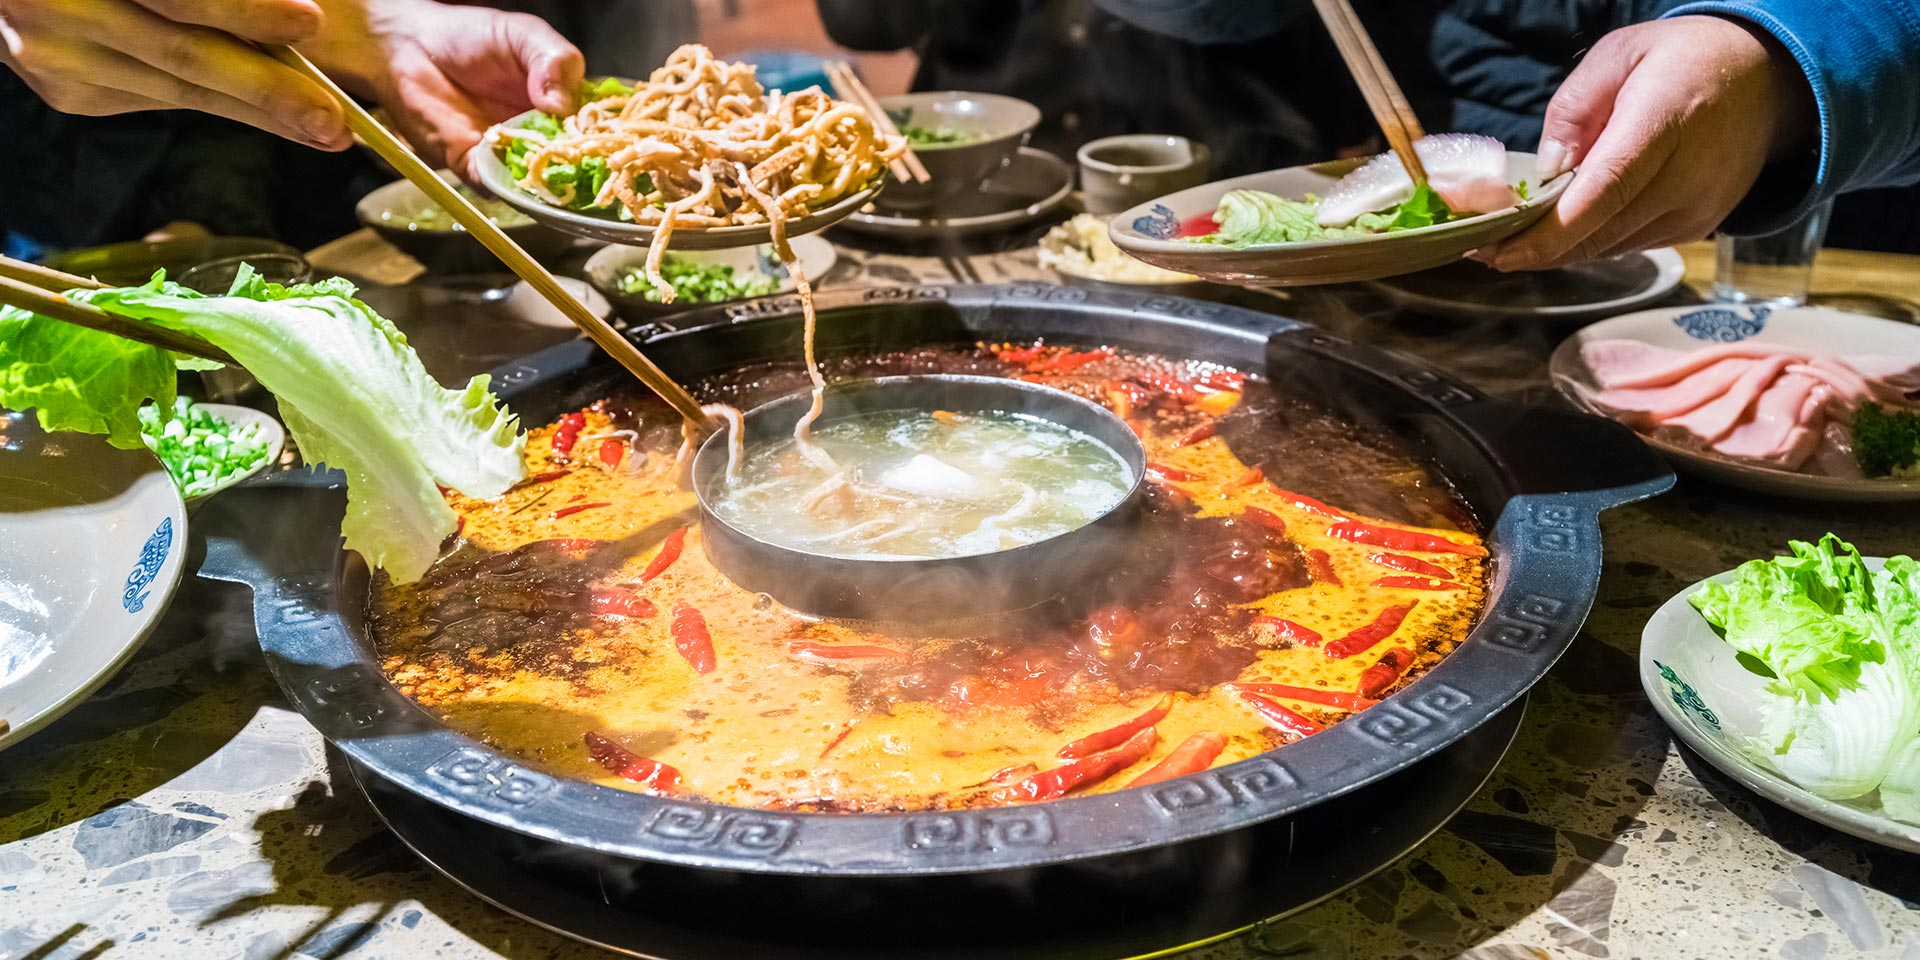 Under The Radar: Make it Your Way at This Sichuan Hot Pot